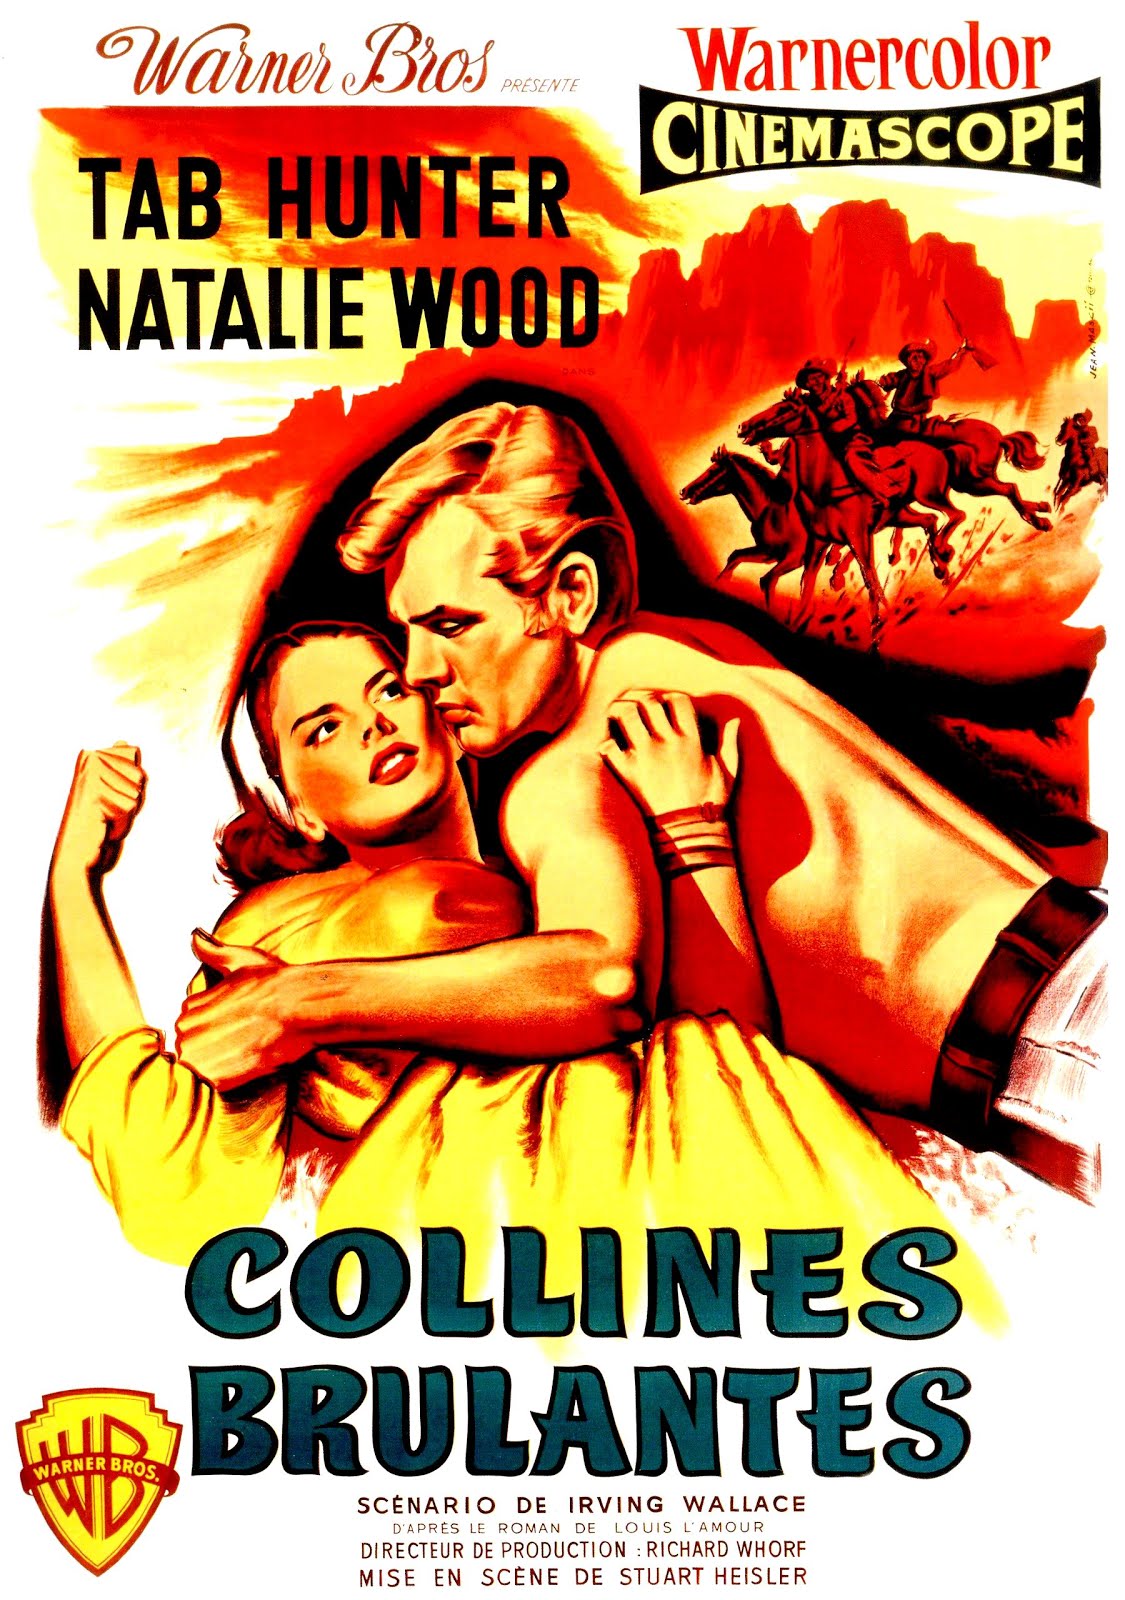 Collines brûlantes (1956) Stuart Heisler - The burning hills